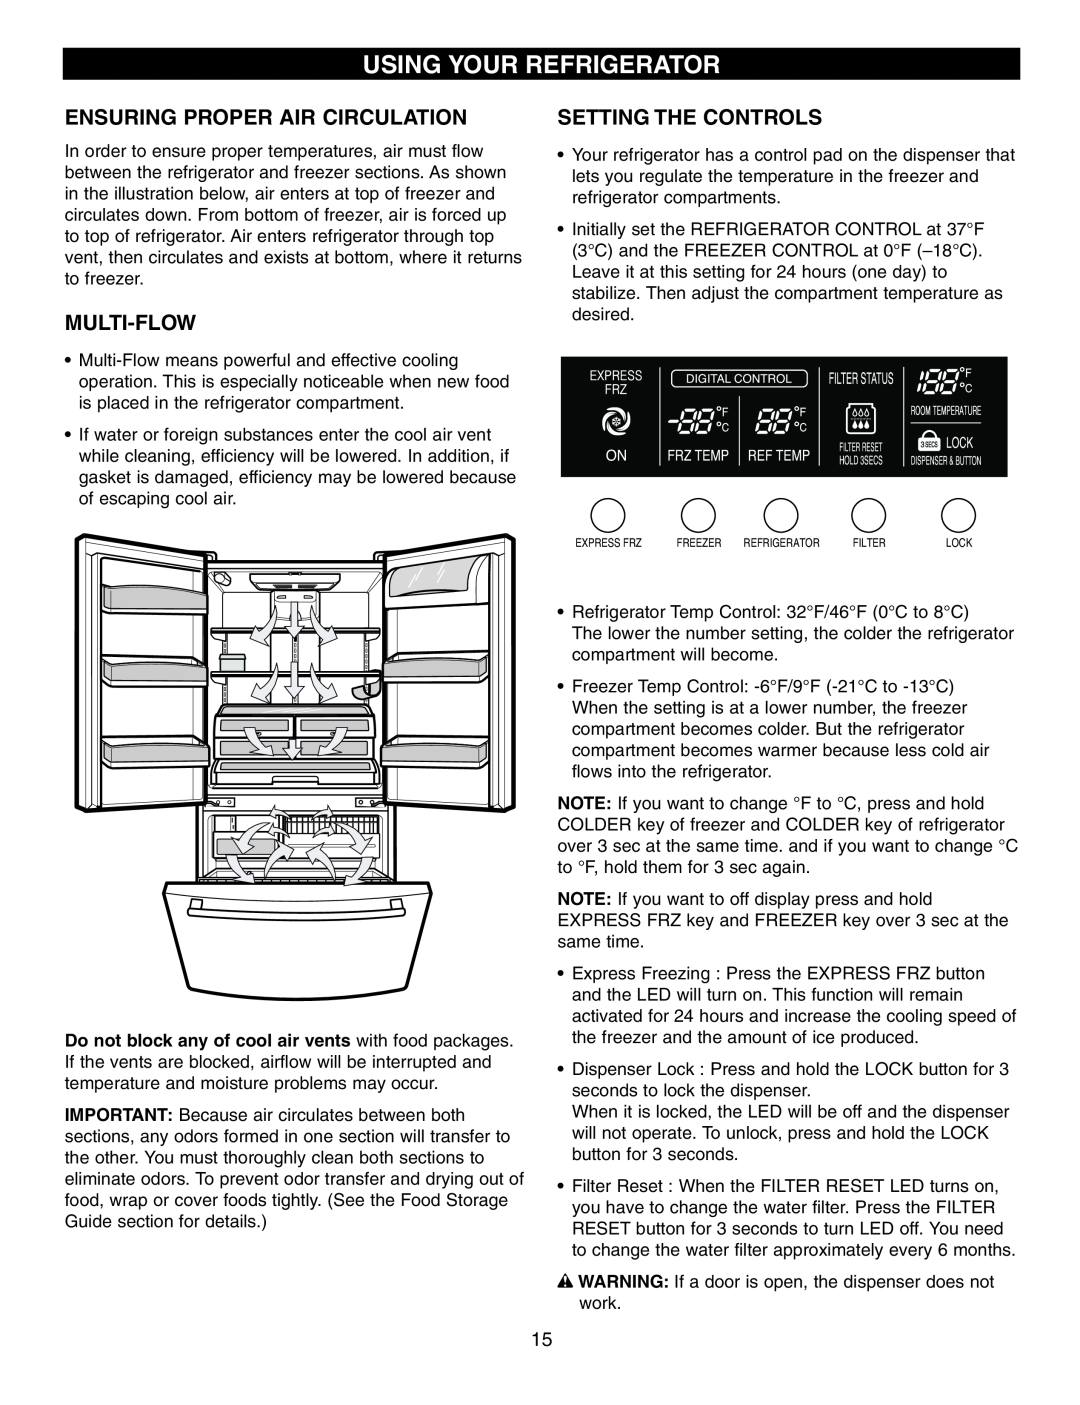 LG Electronics LRFD21855 manual Using Your Refrigerator, Ensuring Proper Air Circulation, Multi-Flow, Setting The Controls 